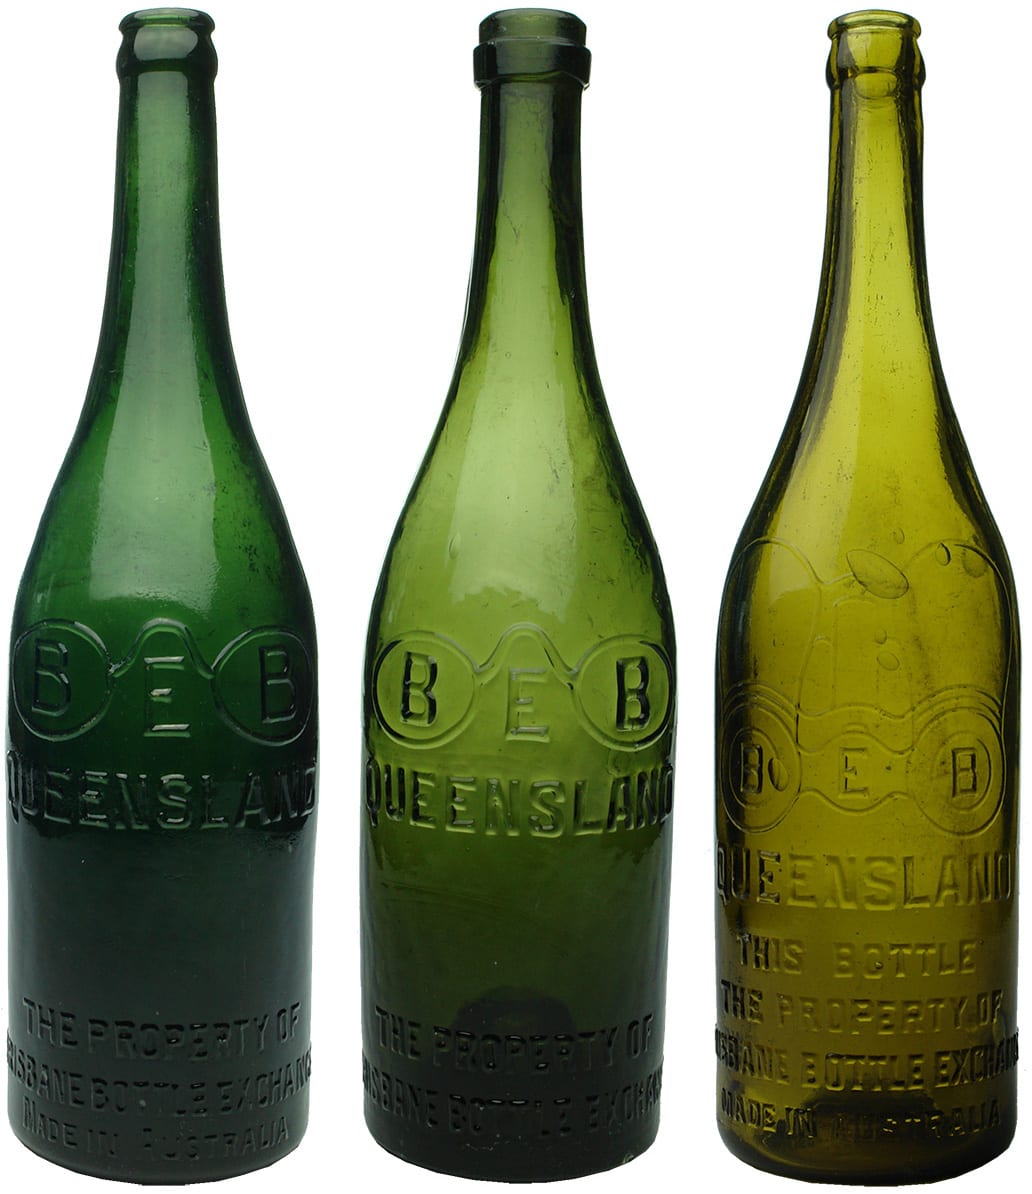 Vintage Queensland Beer Bottles